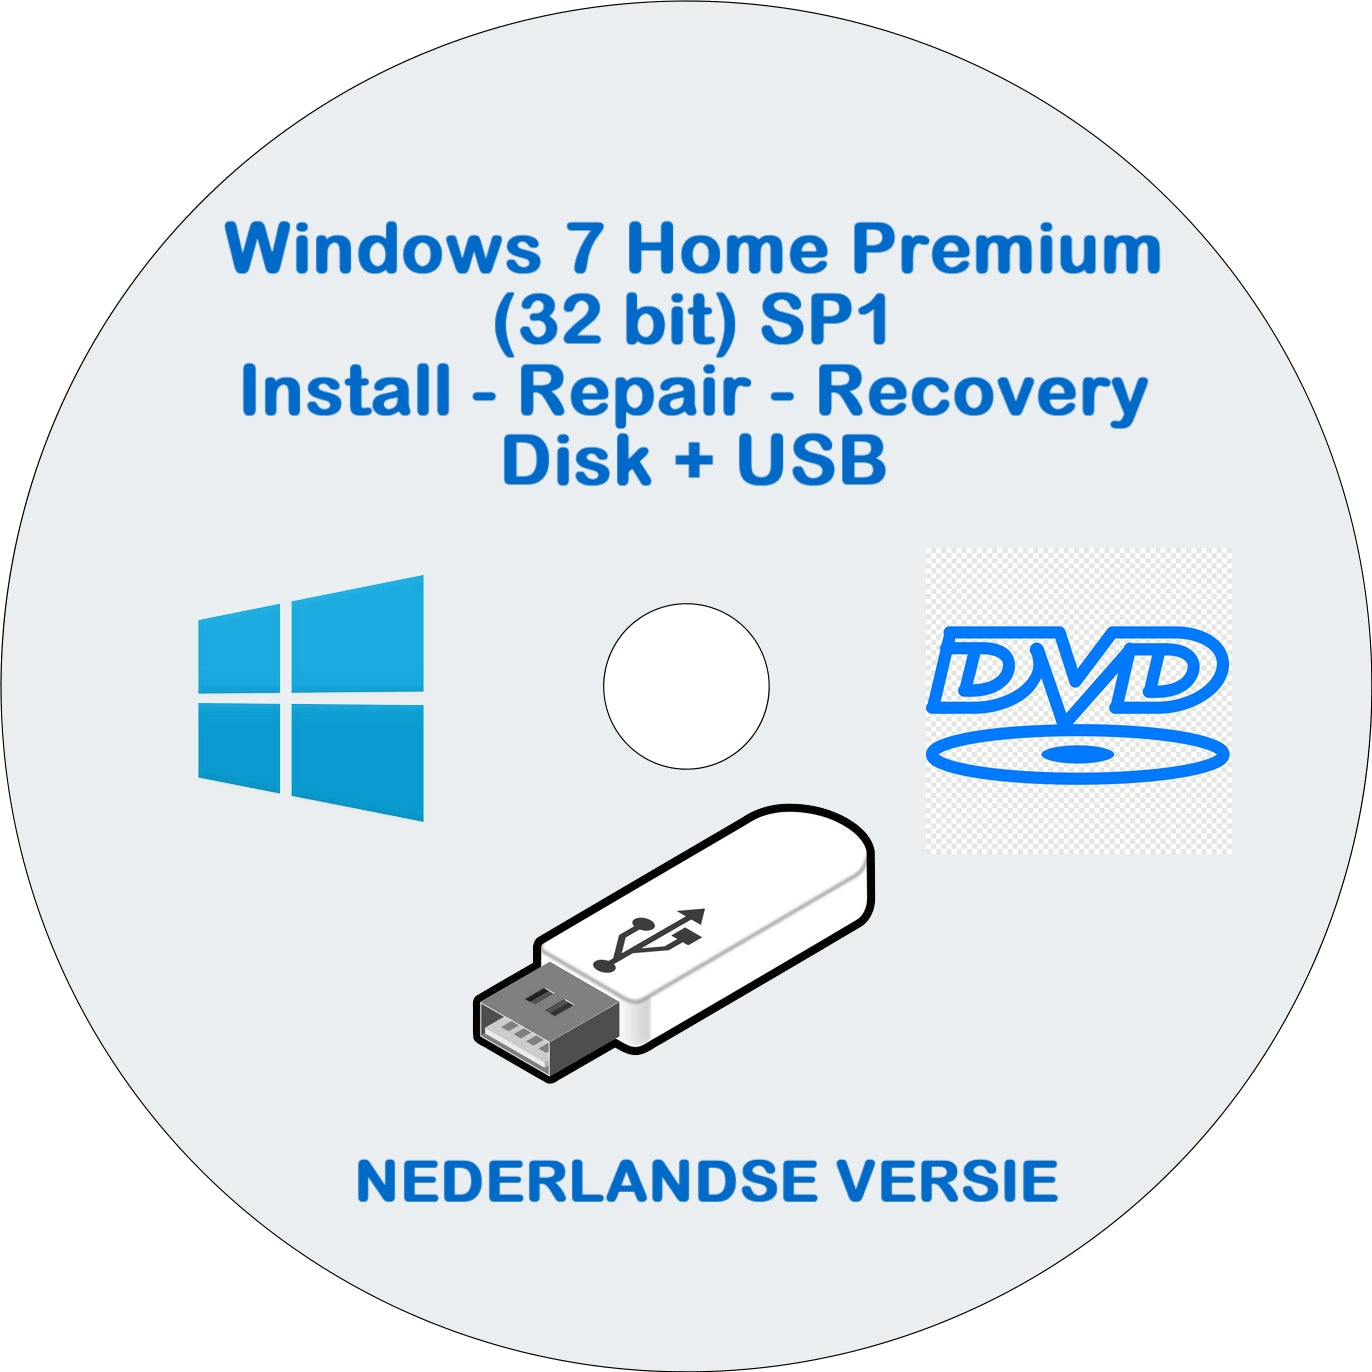 Windows 7 Home Premium Disk + USB 32 Bit